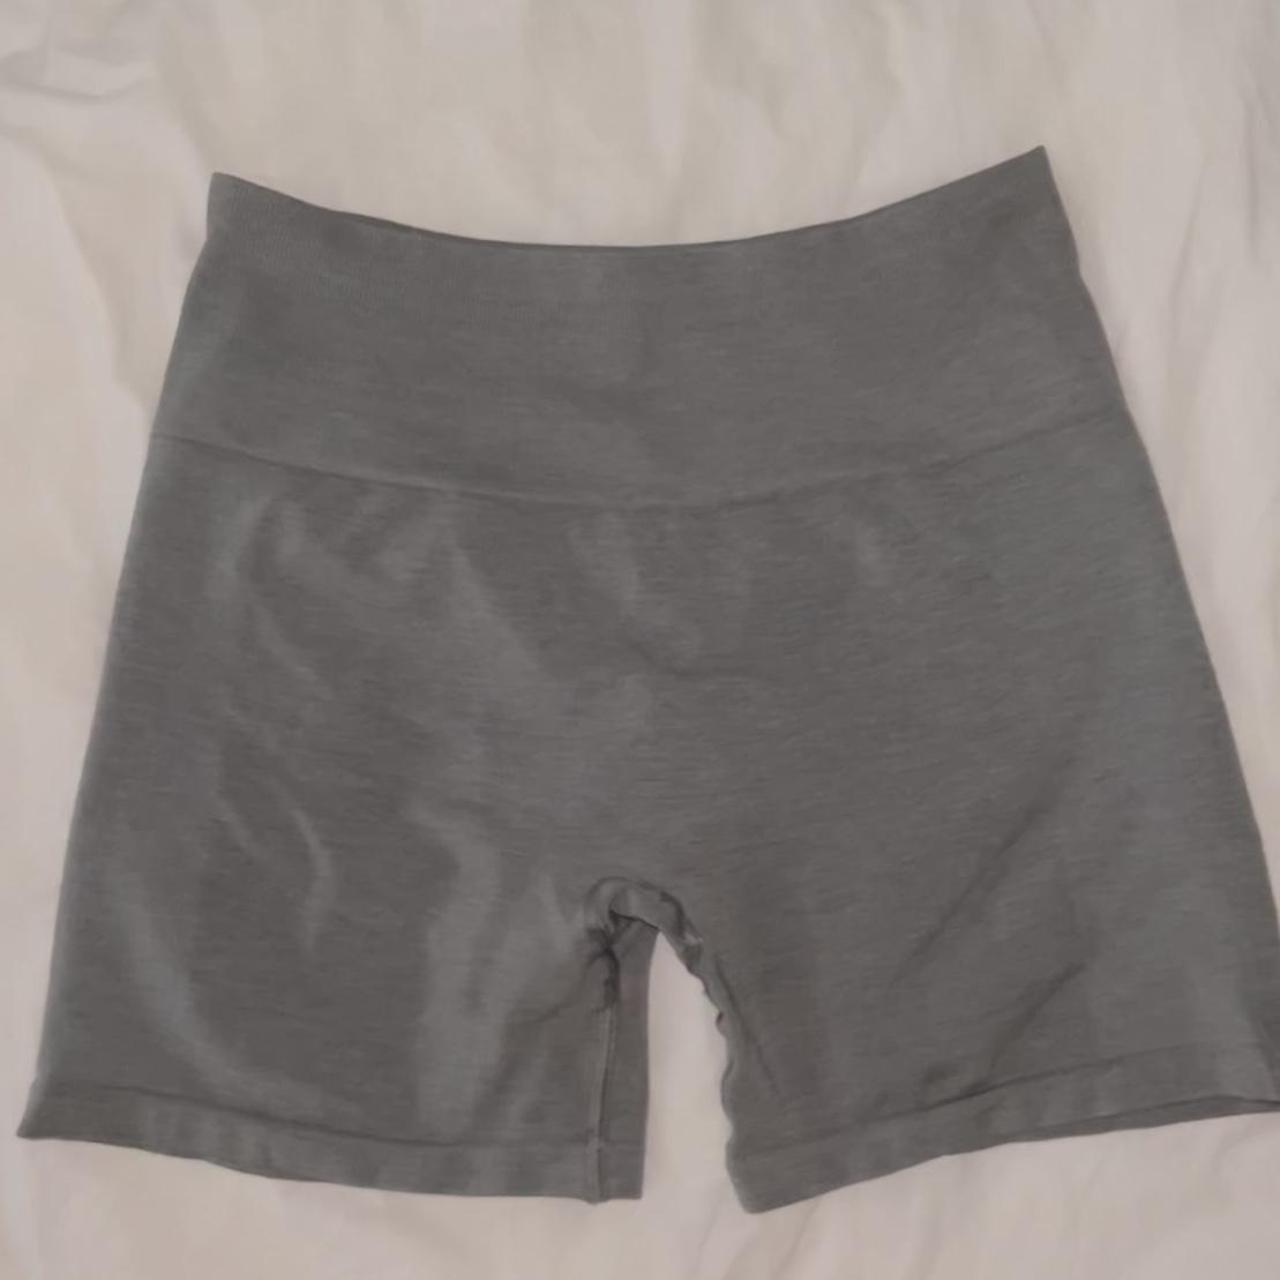 Alphalete amplify shorts in grey size L, worn but no... - Depop